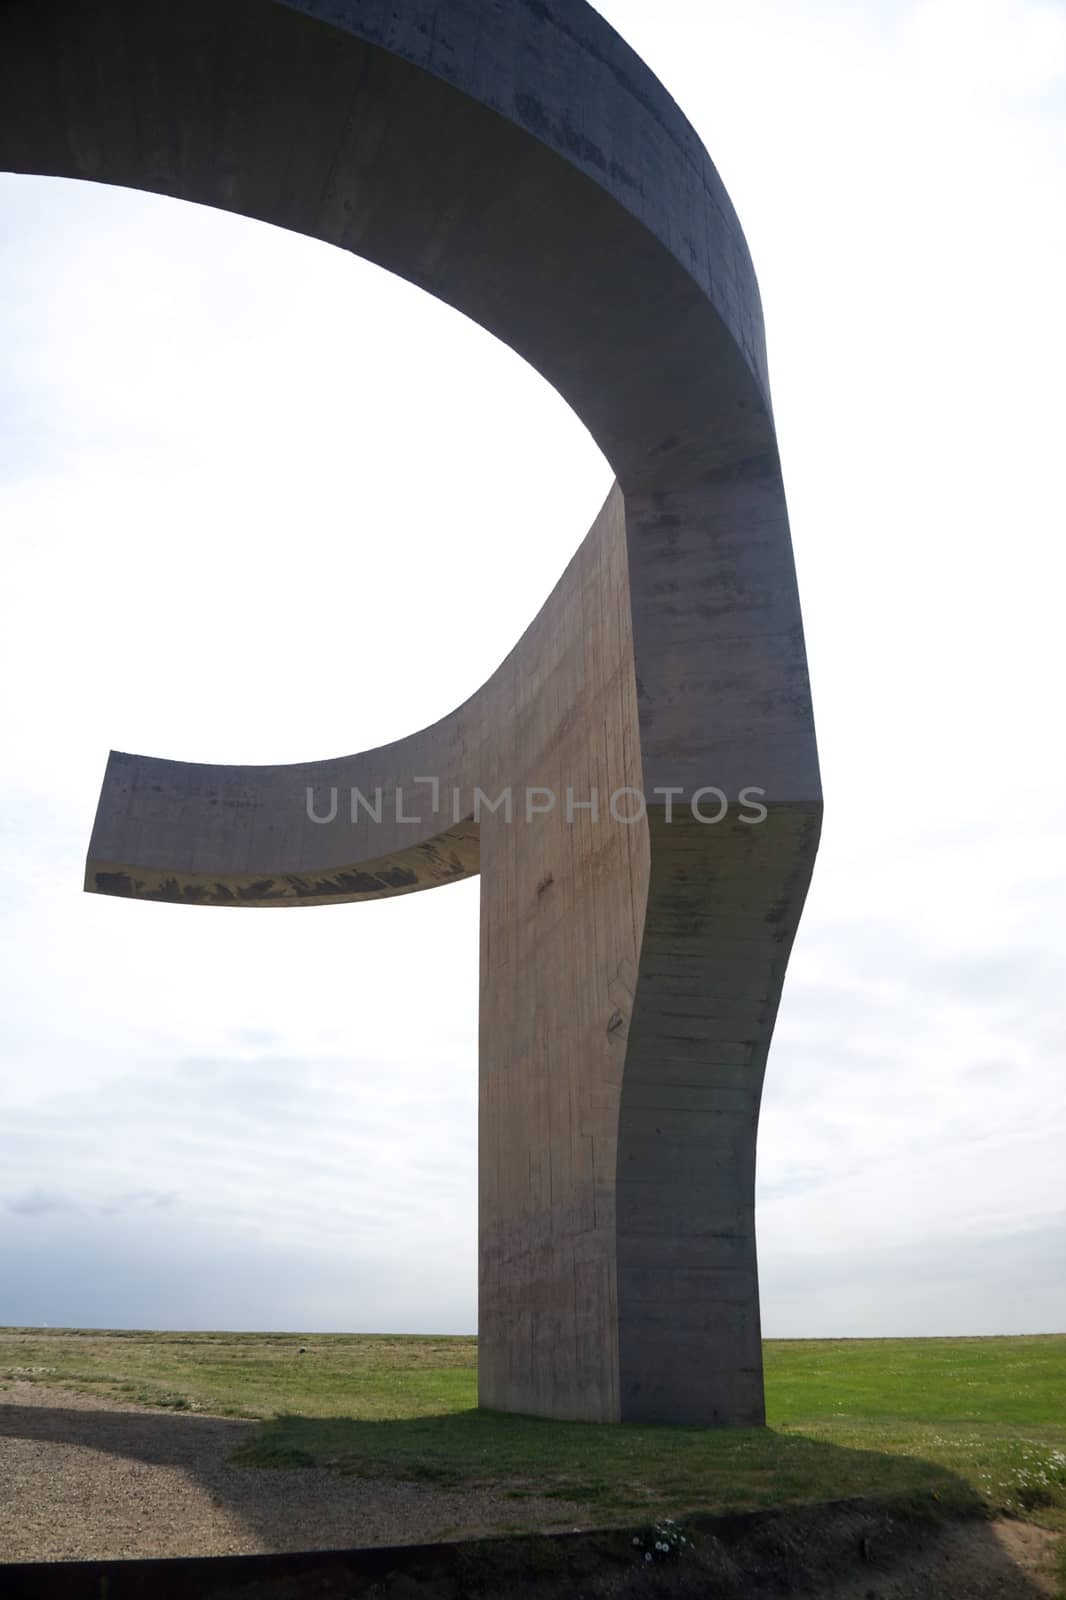 Eulogy of the Horizon by Eduardo Chillida public monument in Gijon city Asturias Spain